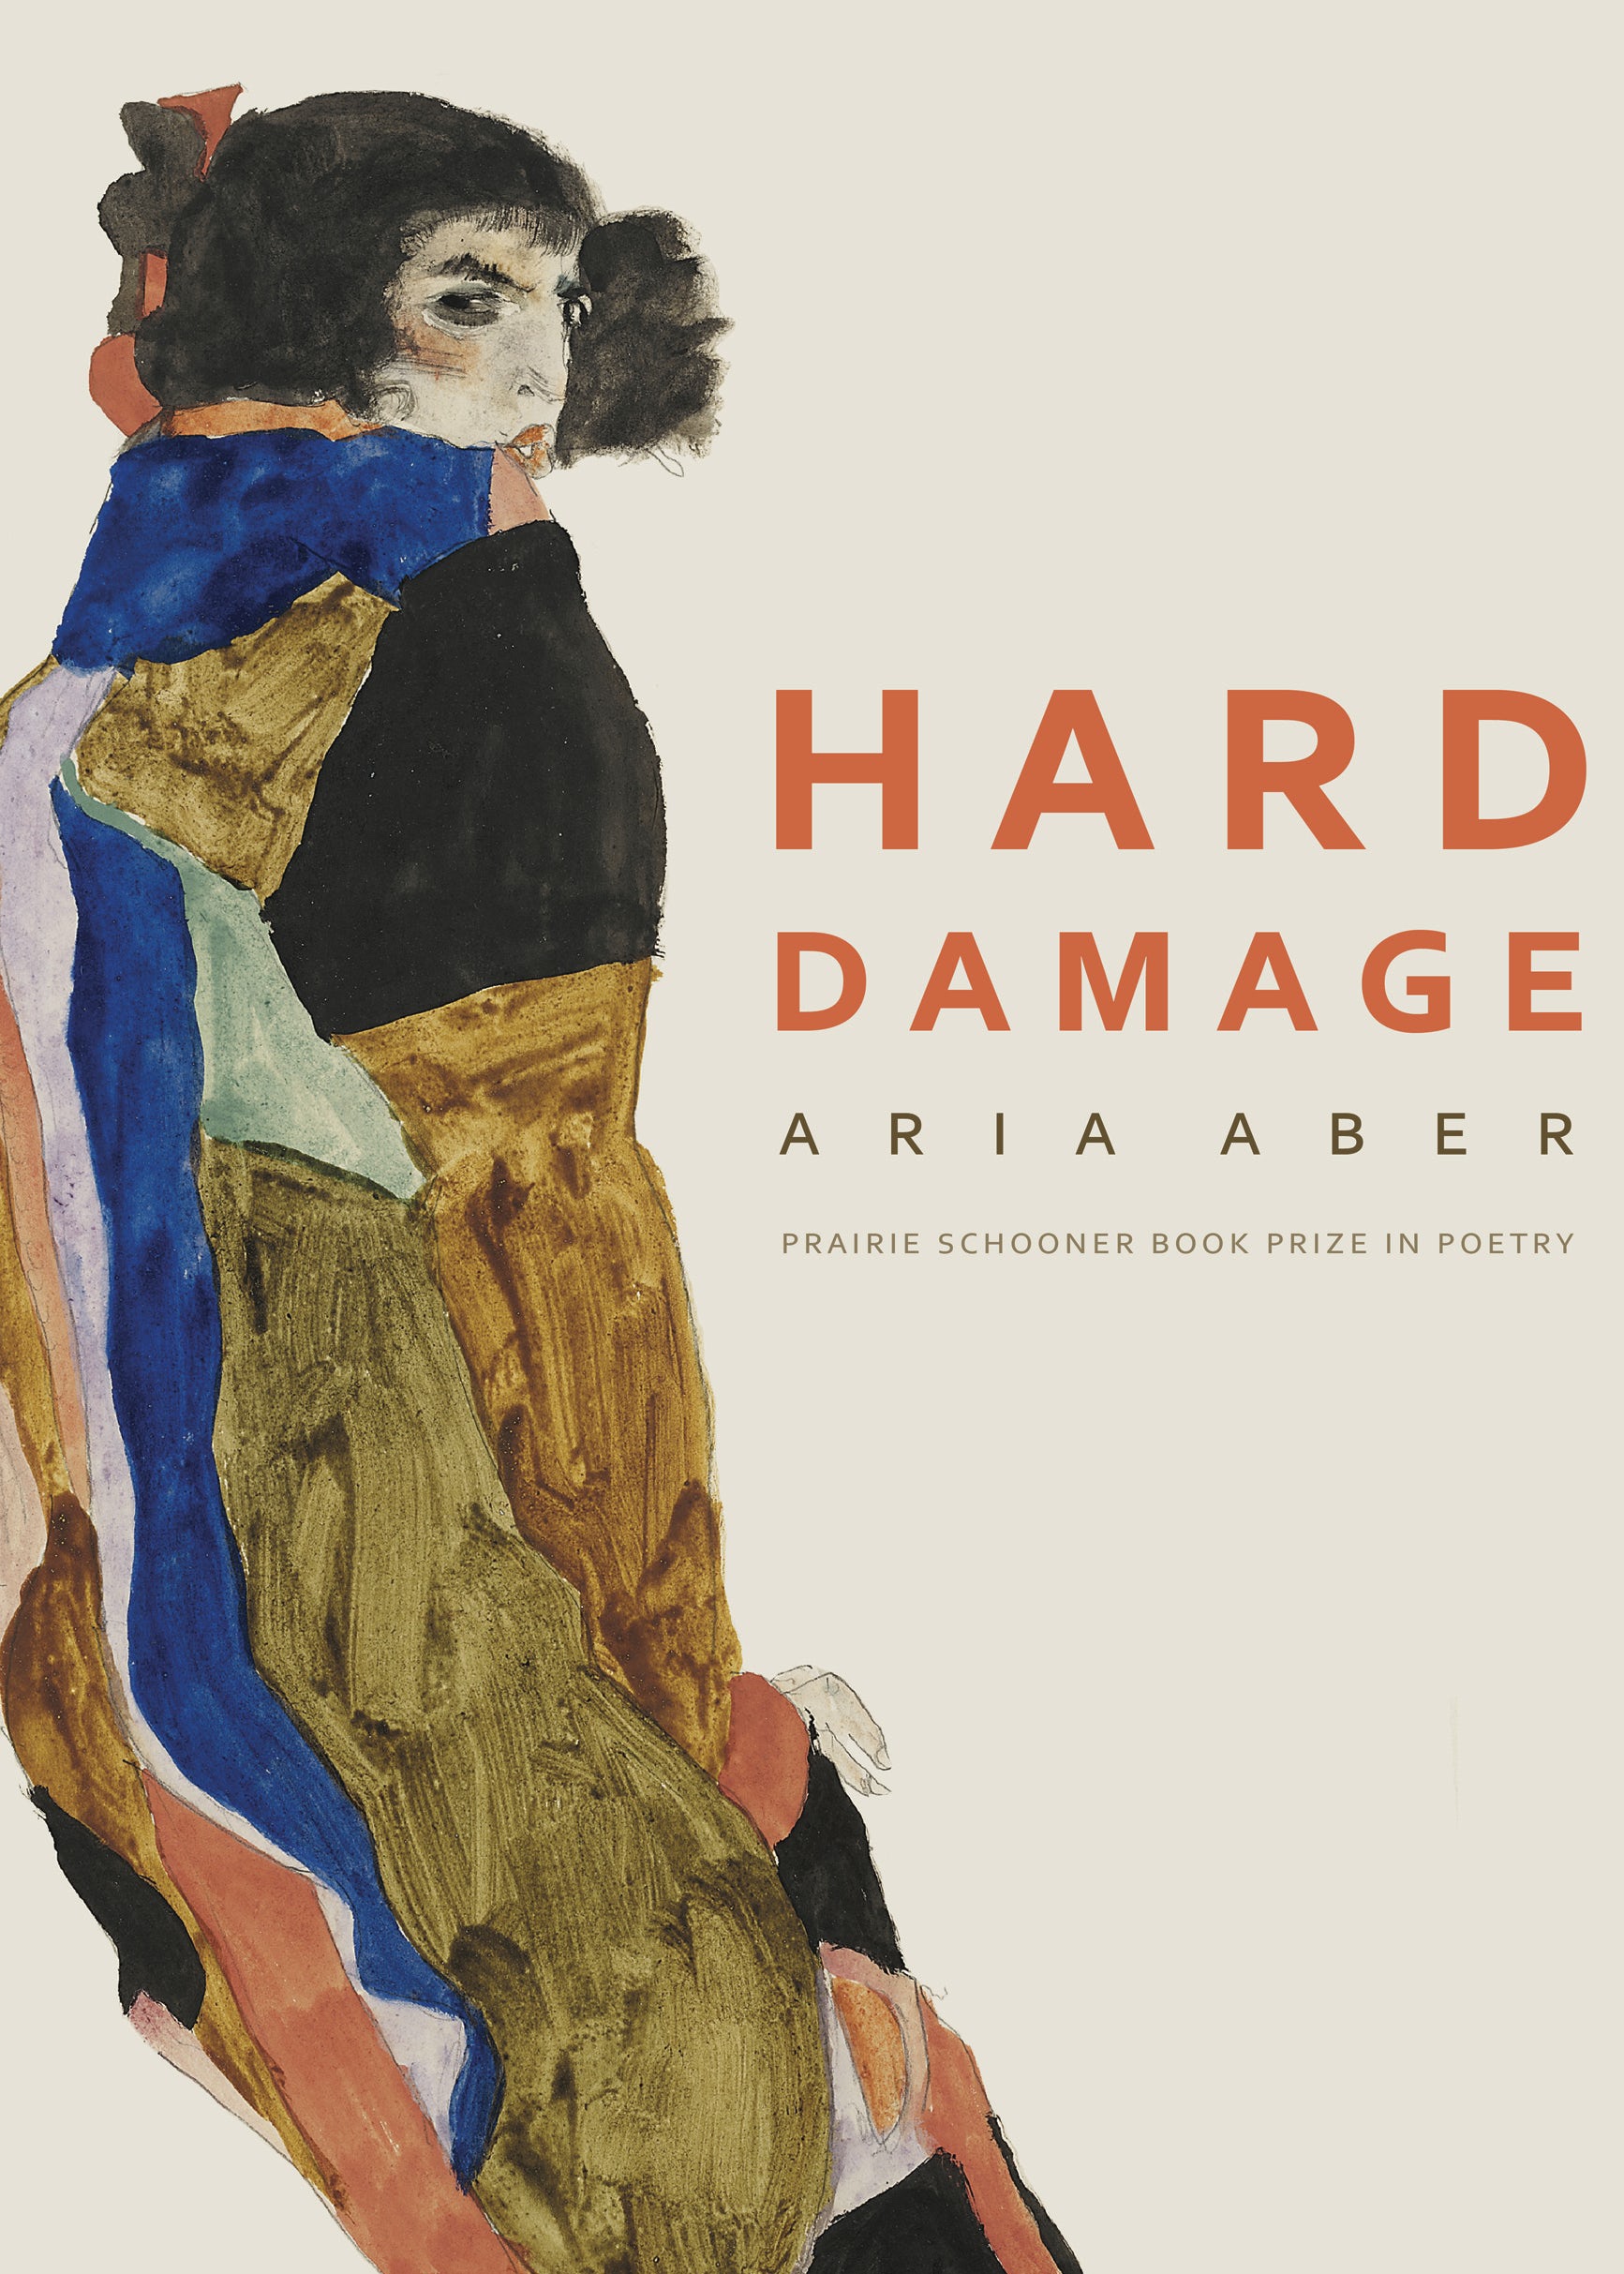 Aria Aber: Hard Damage (2019, University of Nebraska Press)